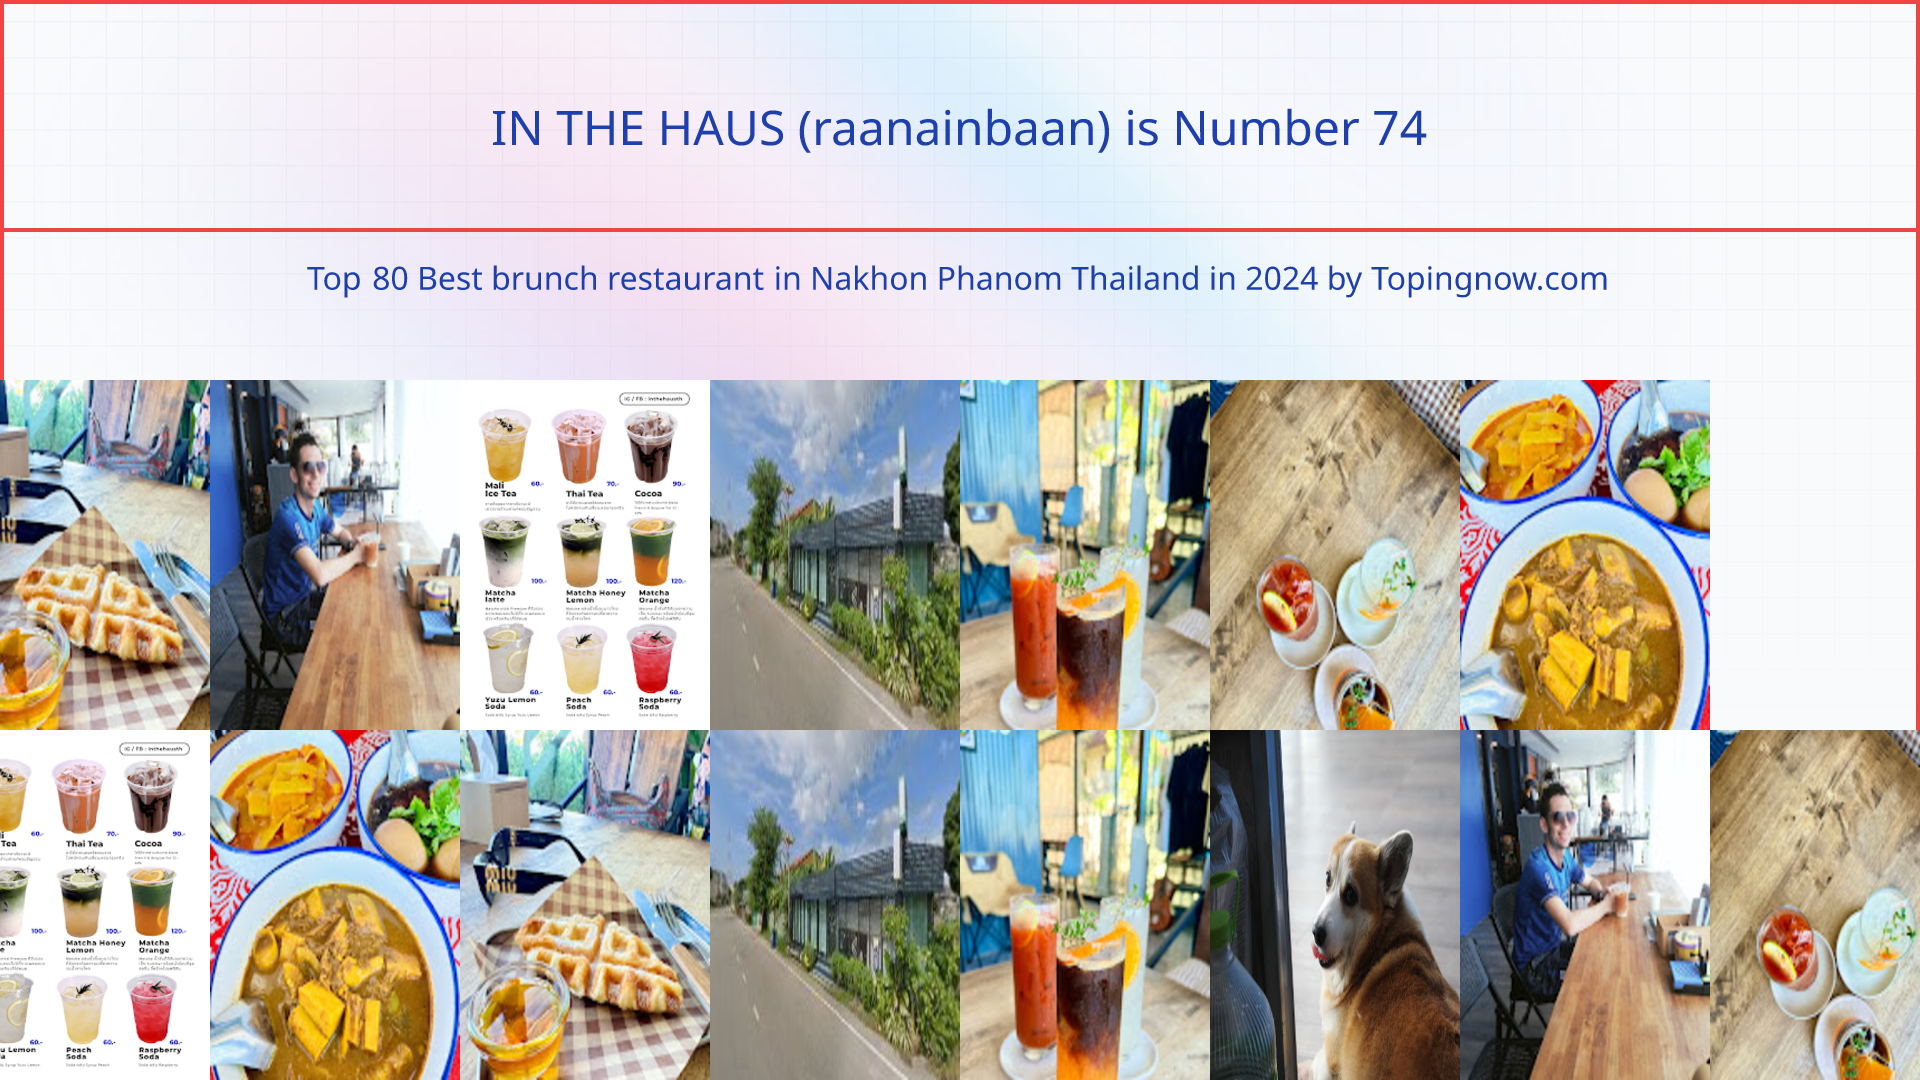 IN THE HAUS (raanainbaan): Top 80 Best brunch restaurant in Nakhon Phanom Thailand in 2024